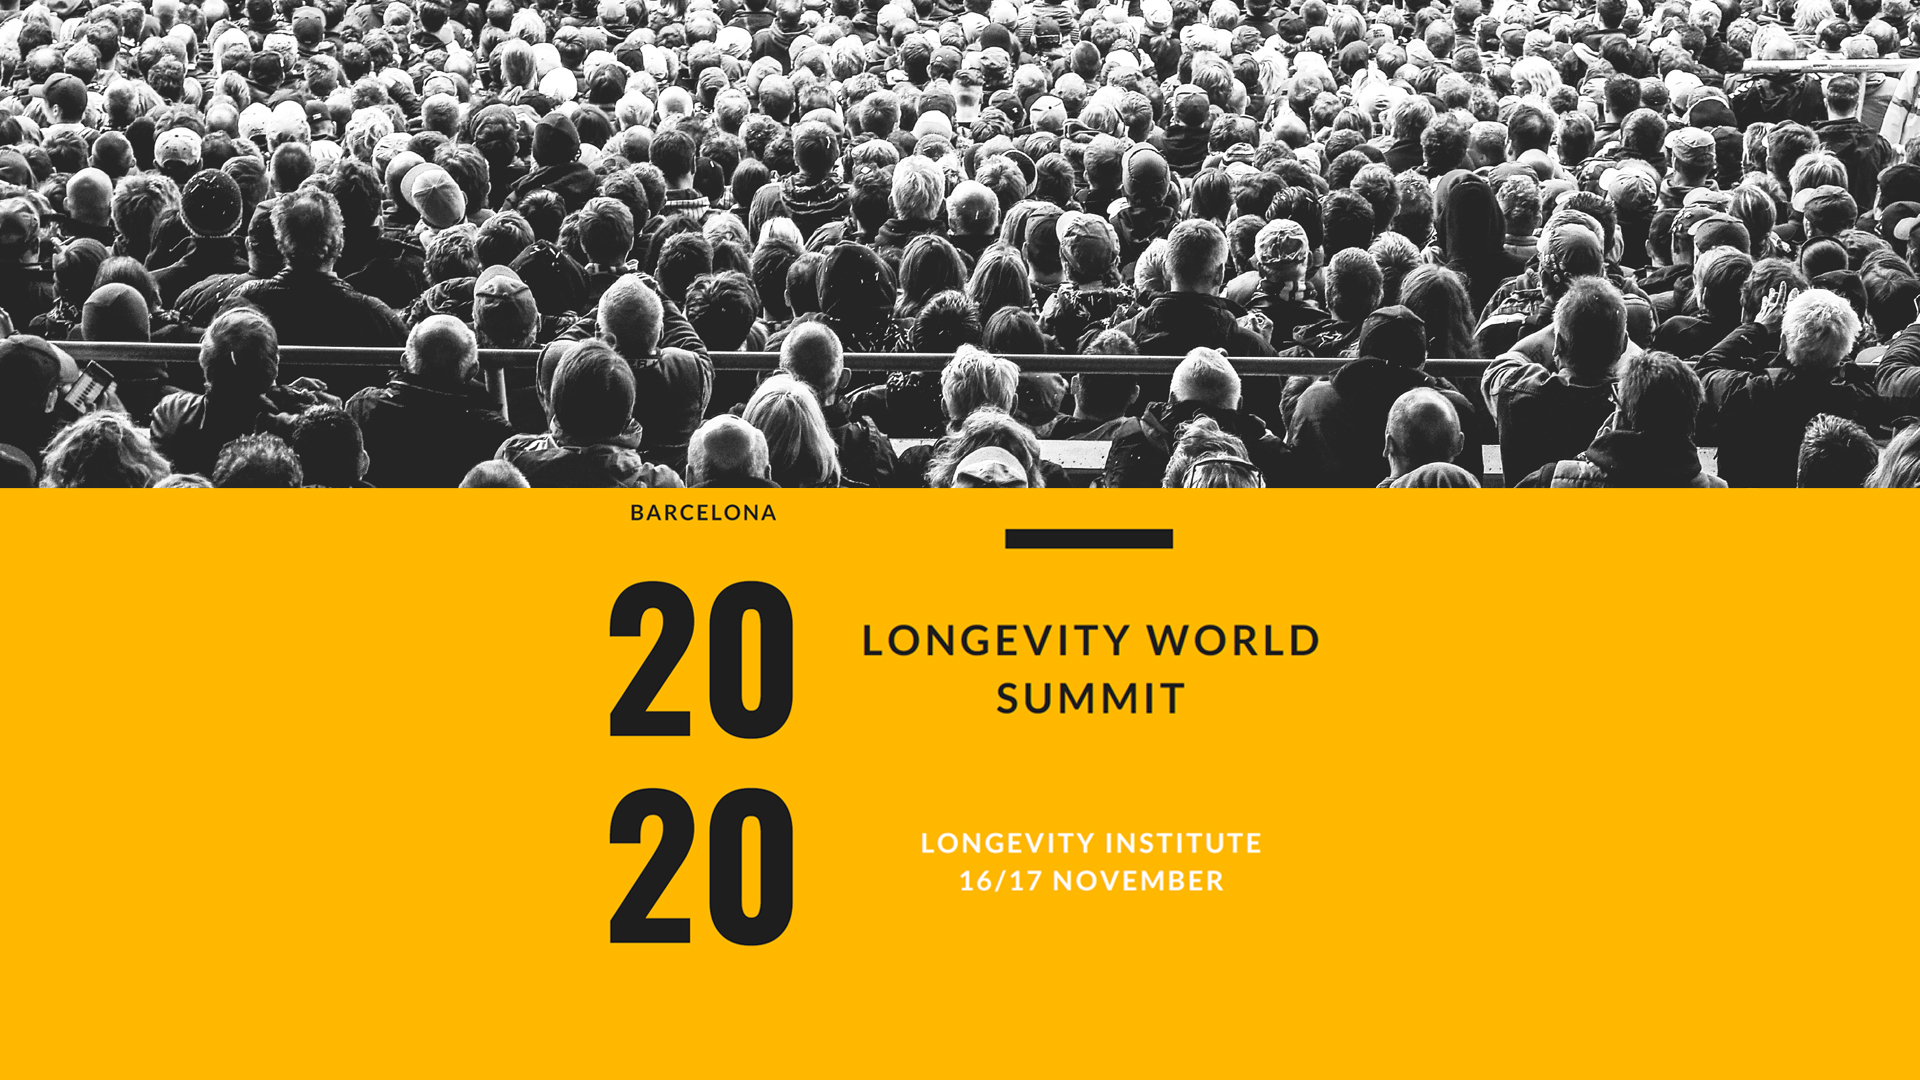 Longevity World Summit 2020